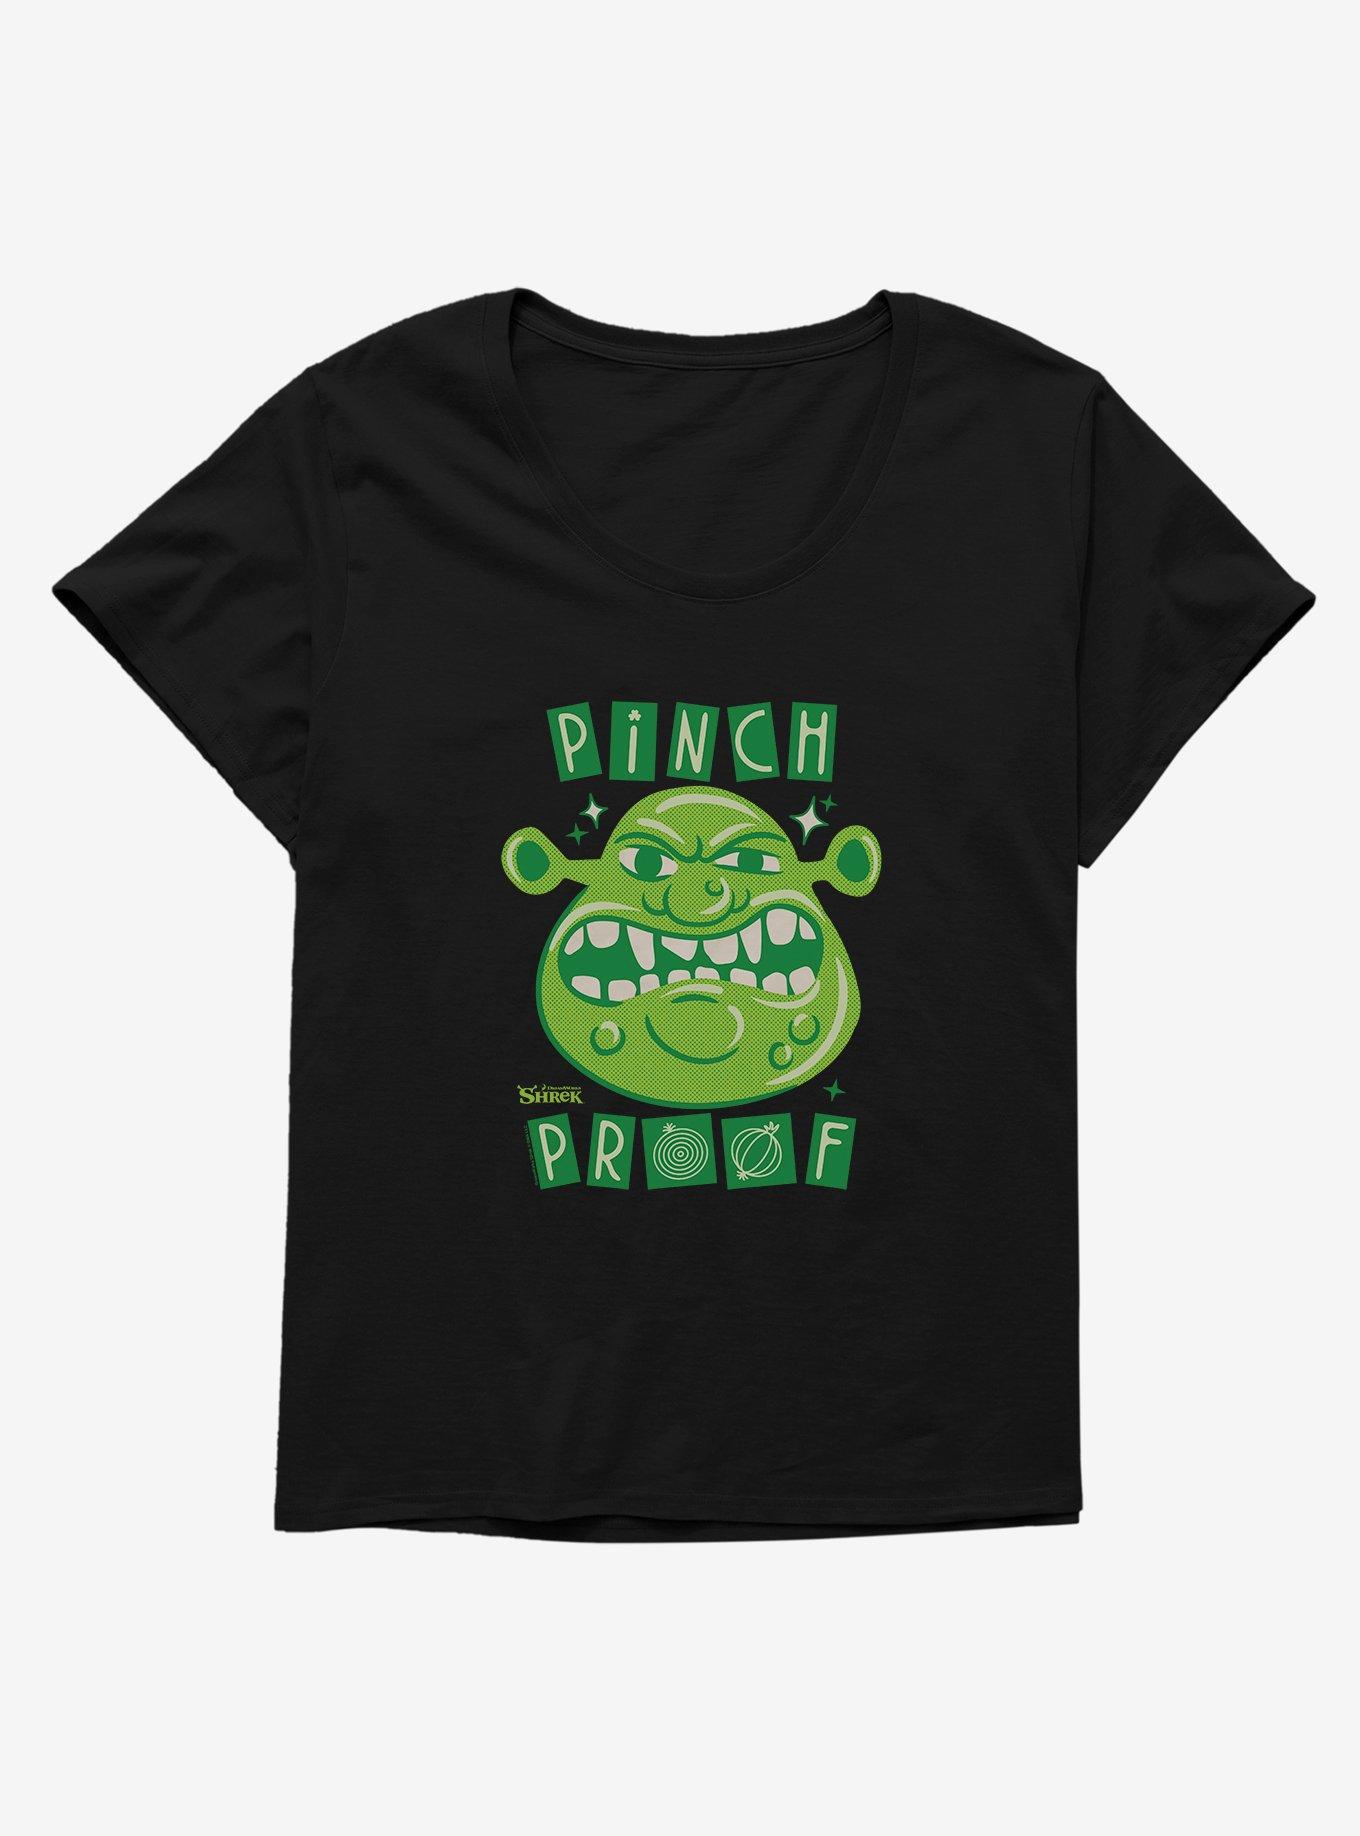 Shrek Pinch Proof Girls T-Shirt Plus Size, BLACK, hi-res